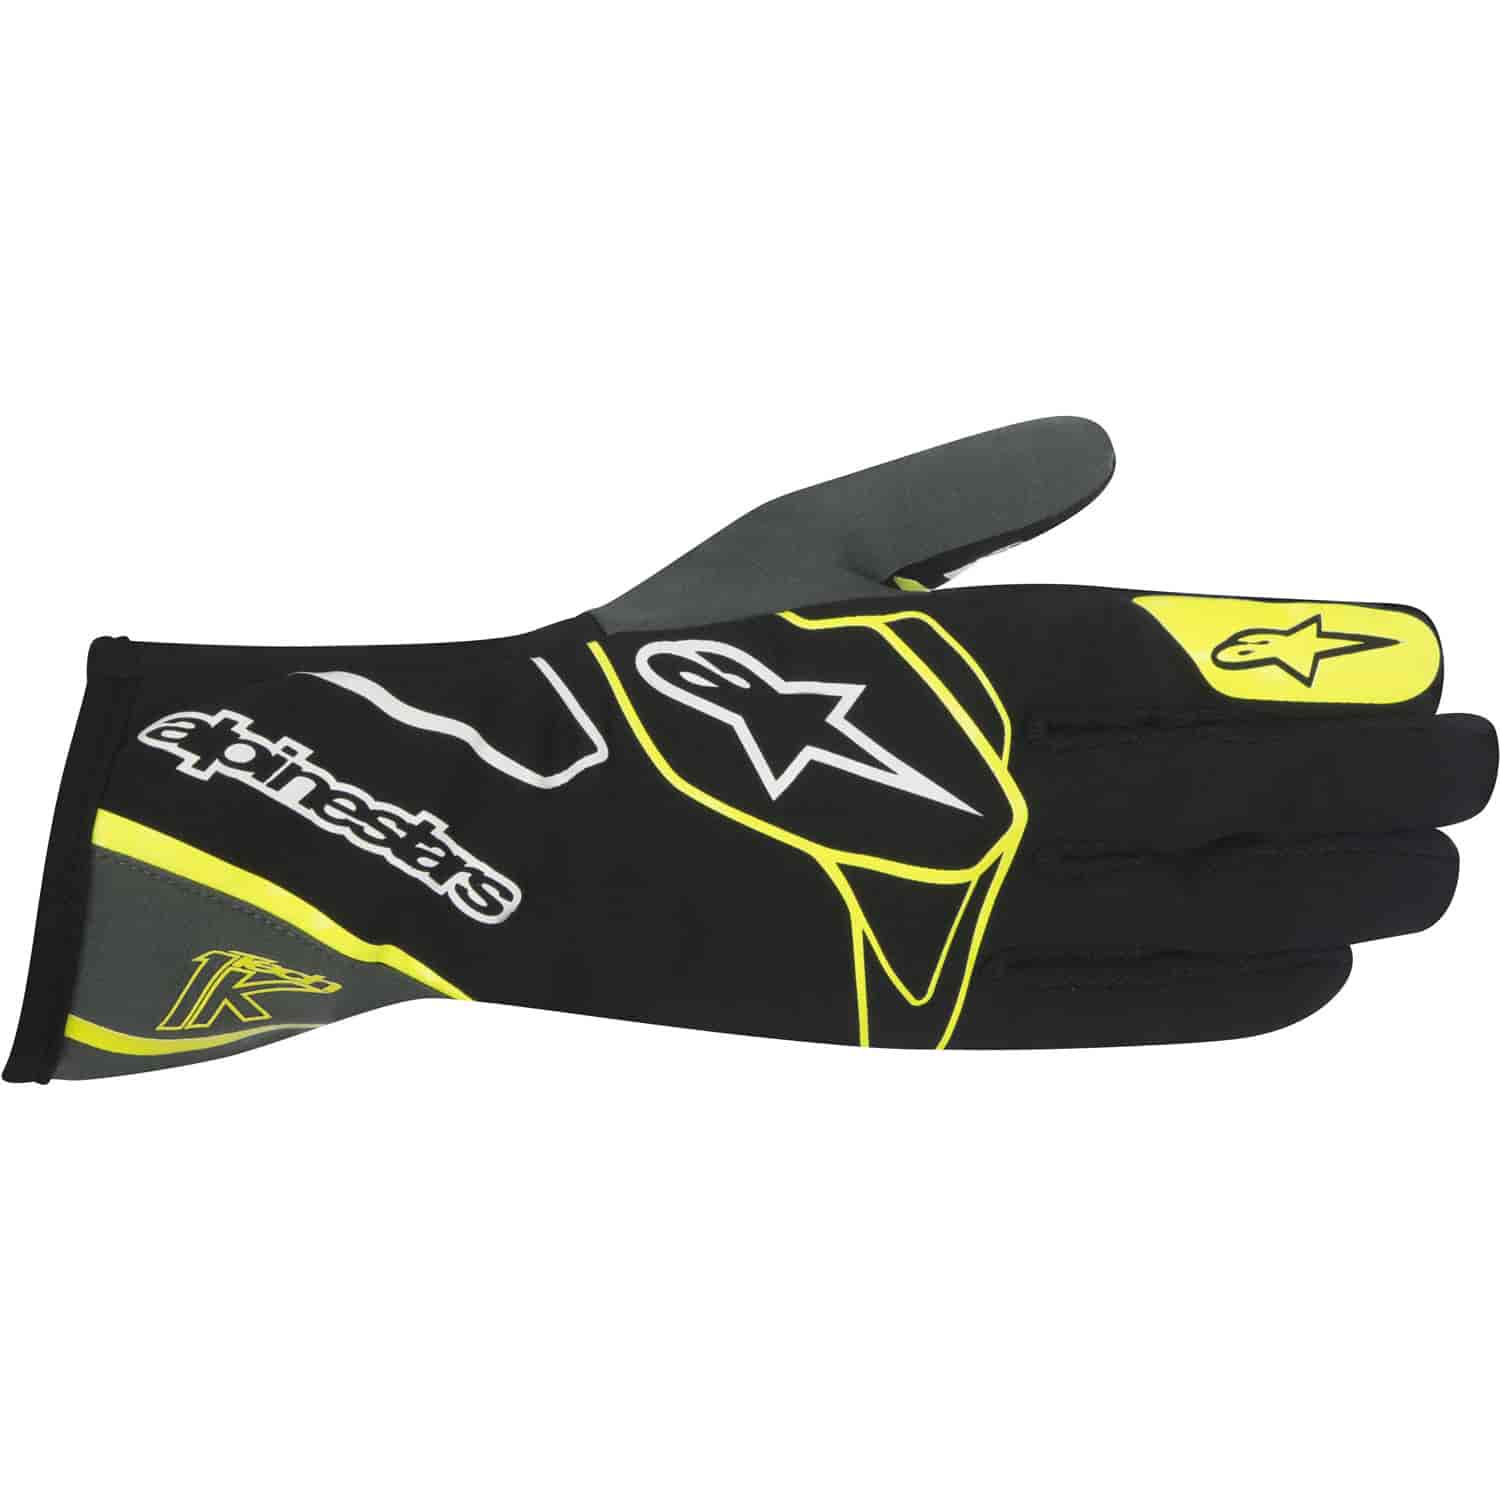 Tech 1-K Gloves Black/Anthracite/Yellow Fluorescent